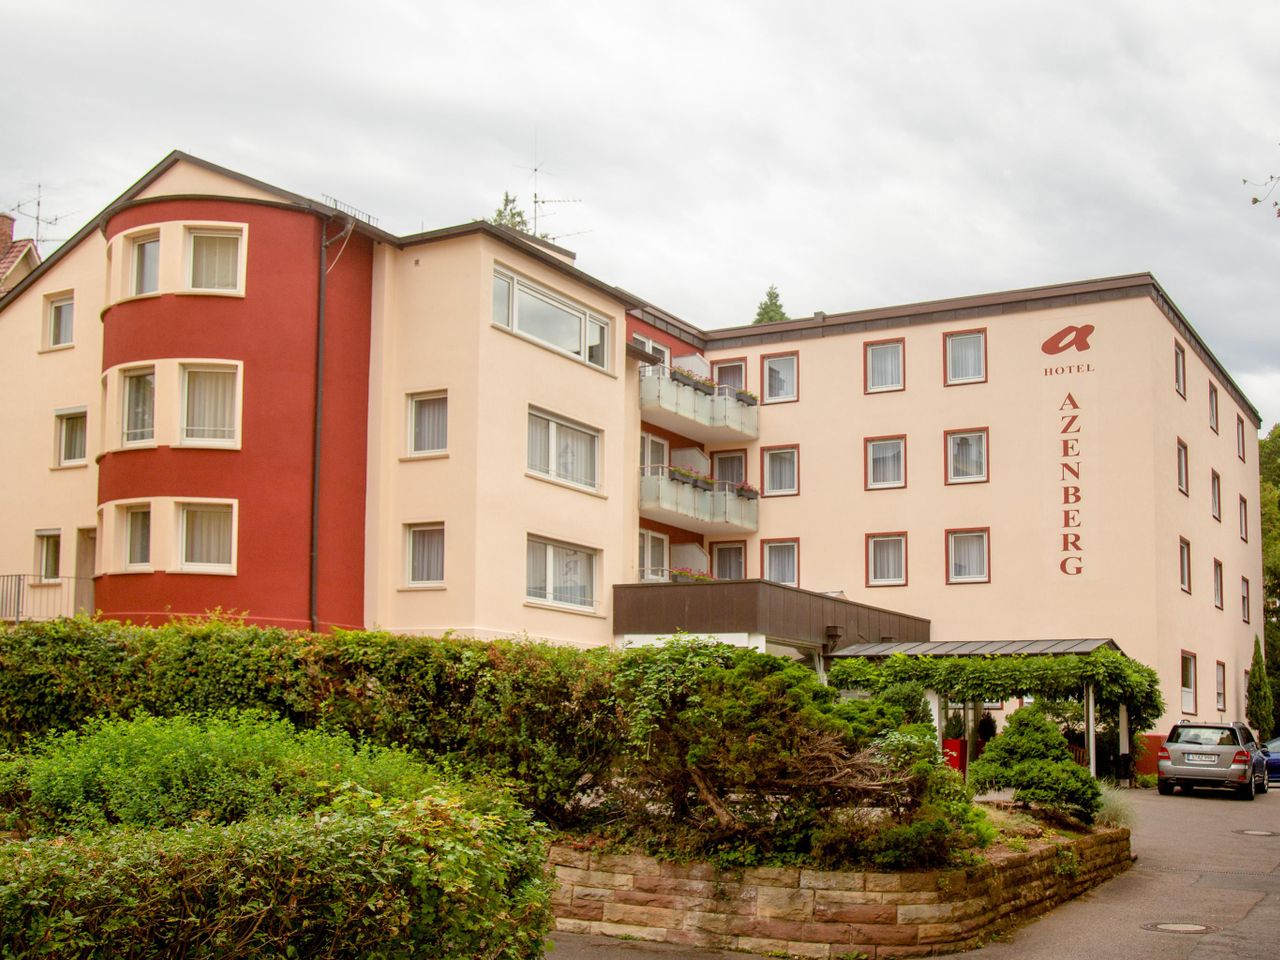 4 Tage im Hotel Azenberg Stuttgart 